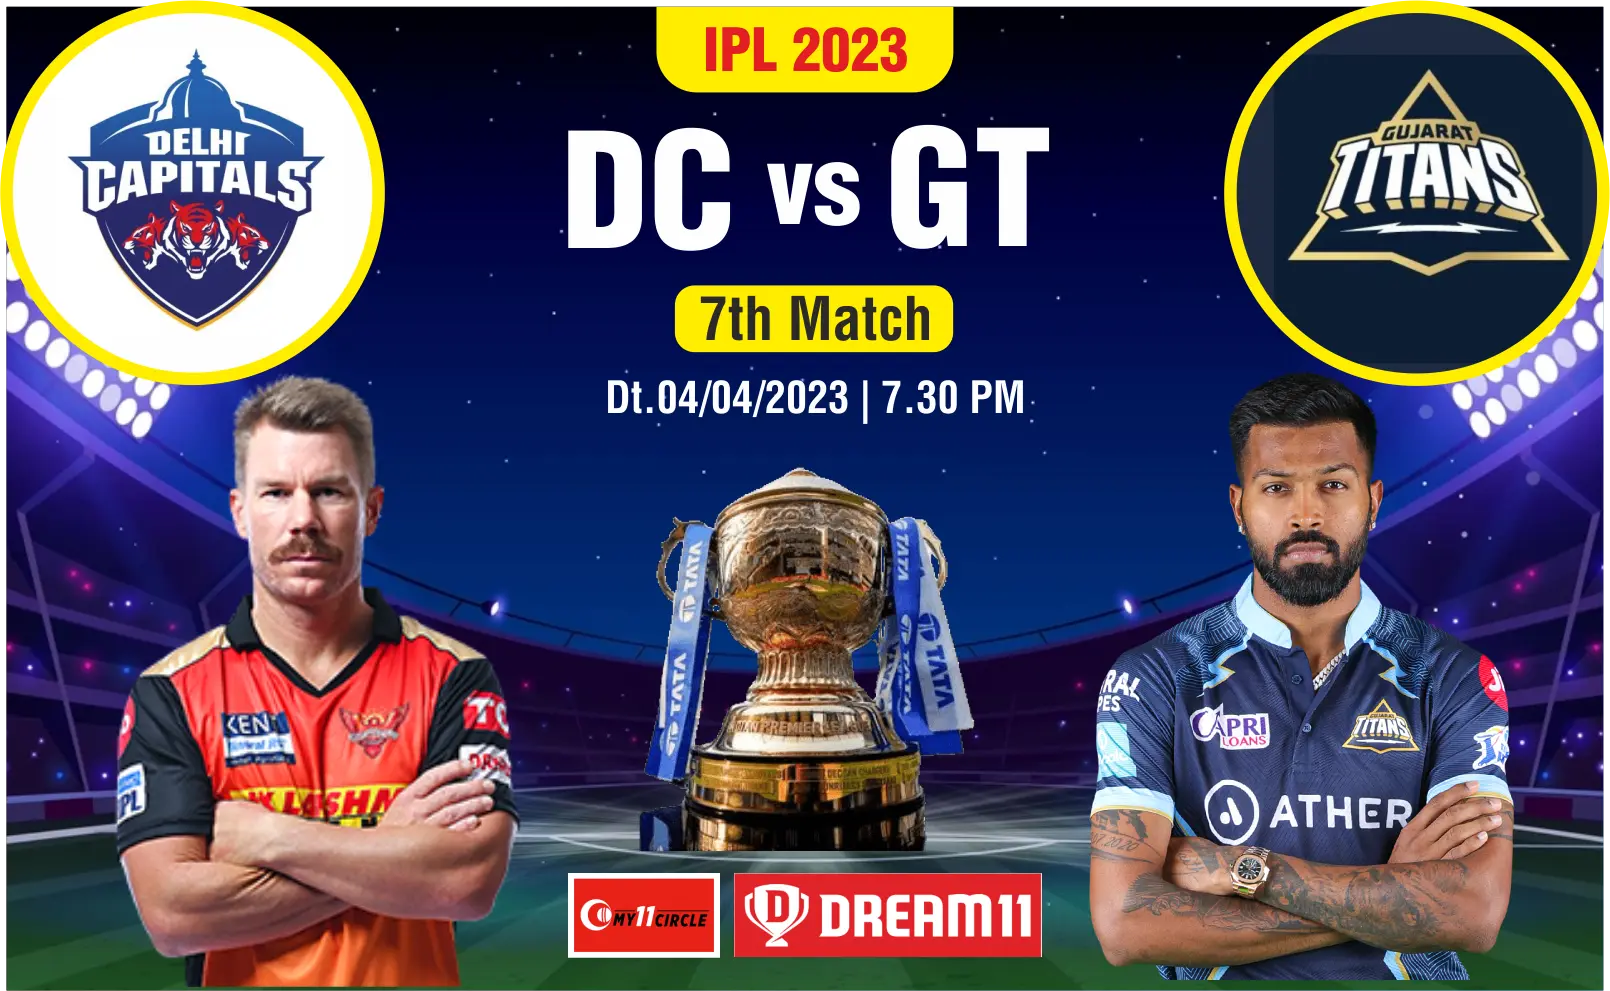 Today-IPL-2023-MAtch-DC-vs-GT